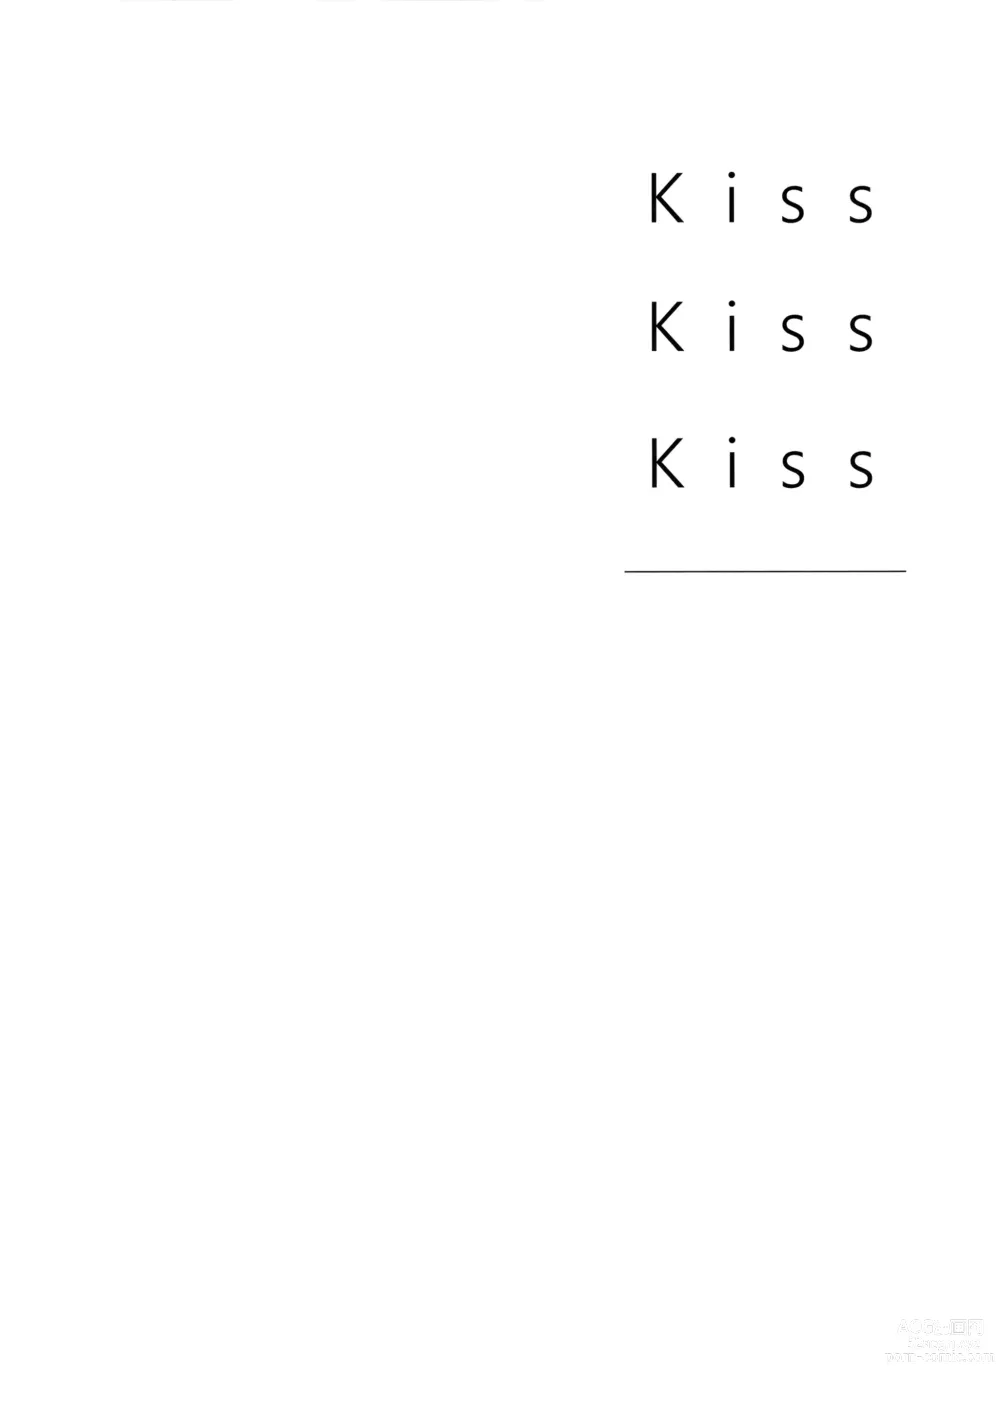 Page 14 of doujinshi Kiss Kiss Kiss